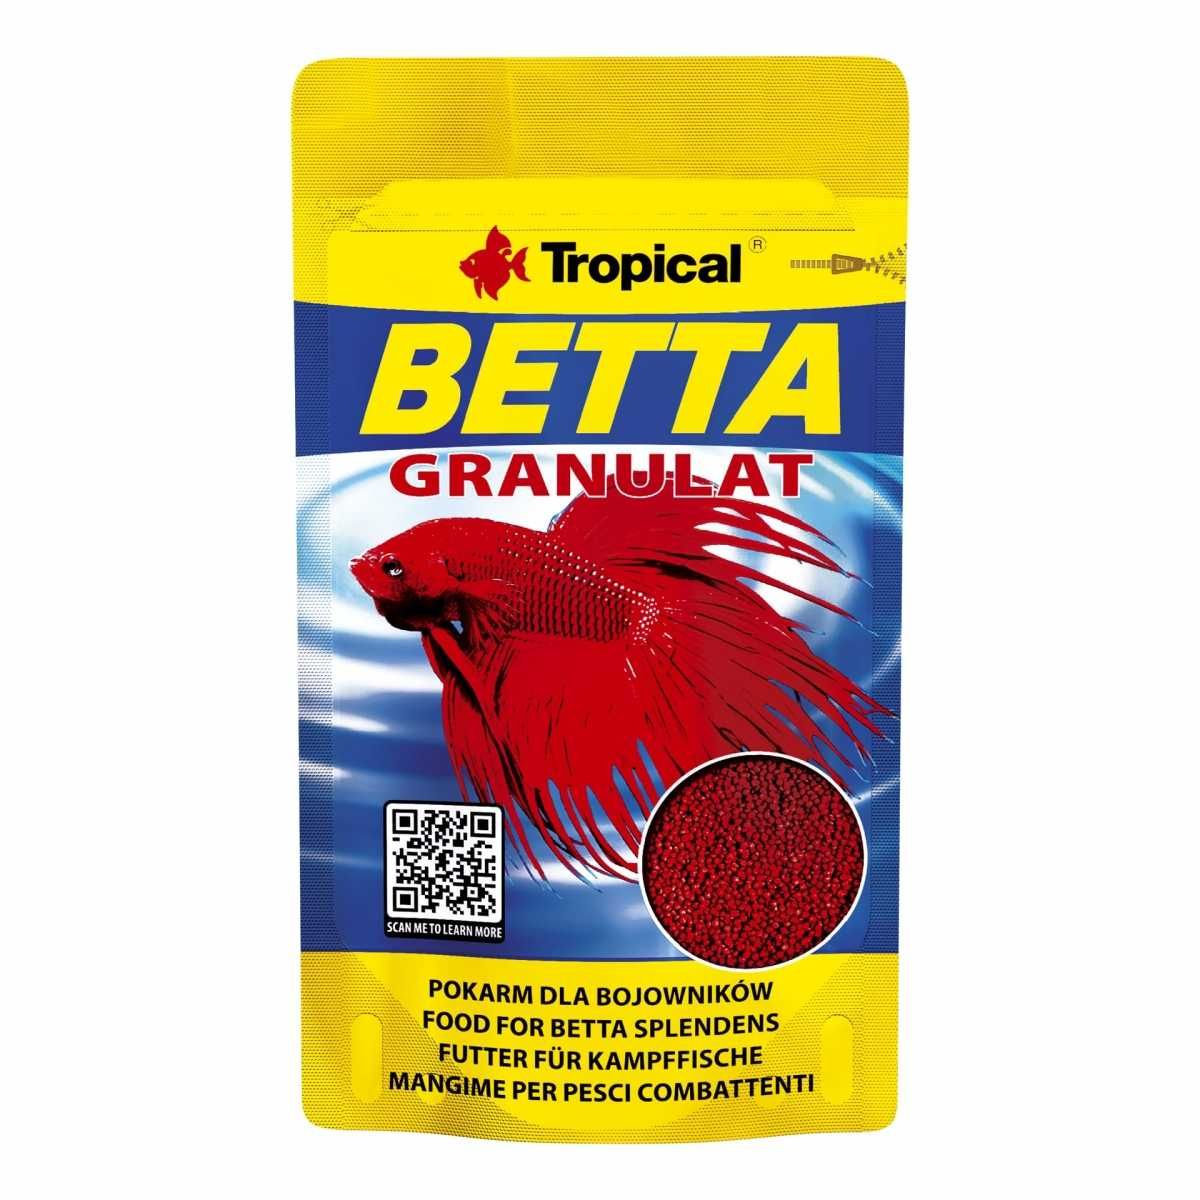 Tropical Betta Granulat 10g - Pokarm dla bojownika